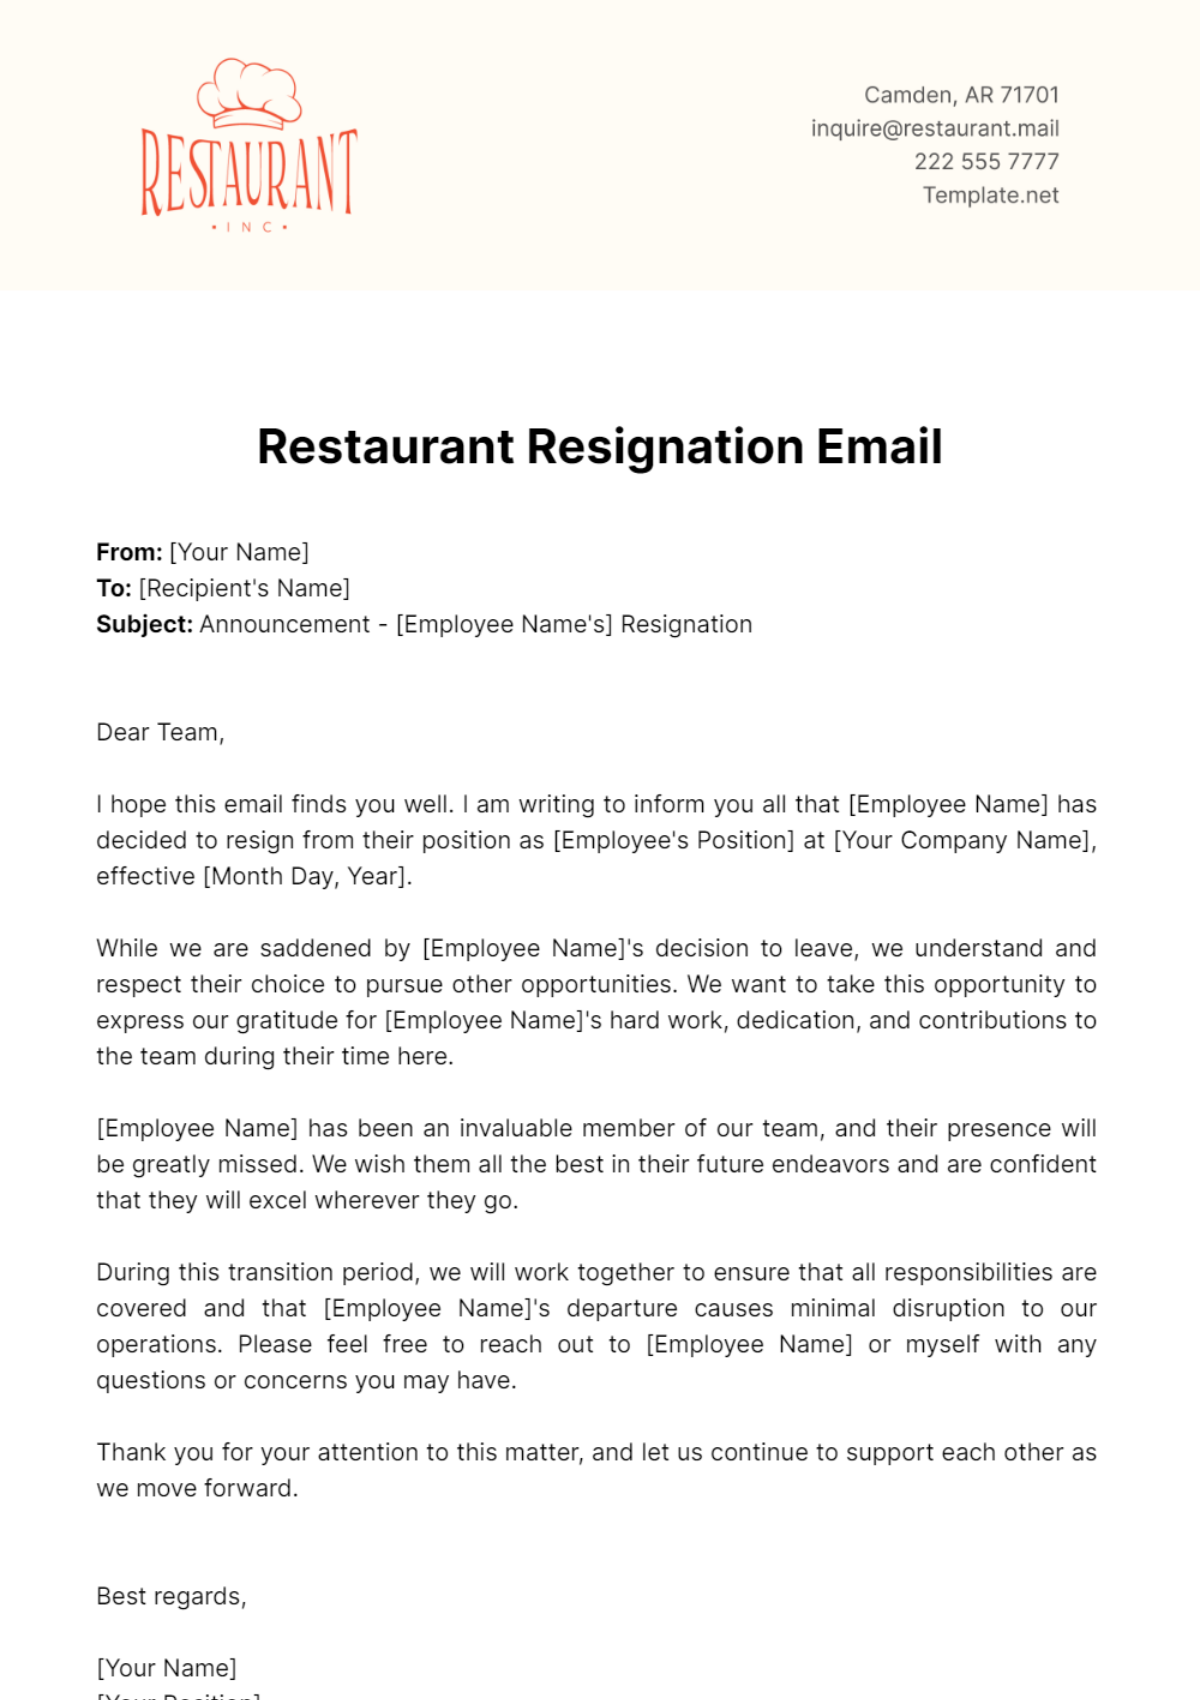 Free Restaurant Resignation Email Template